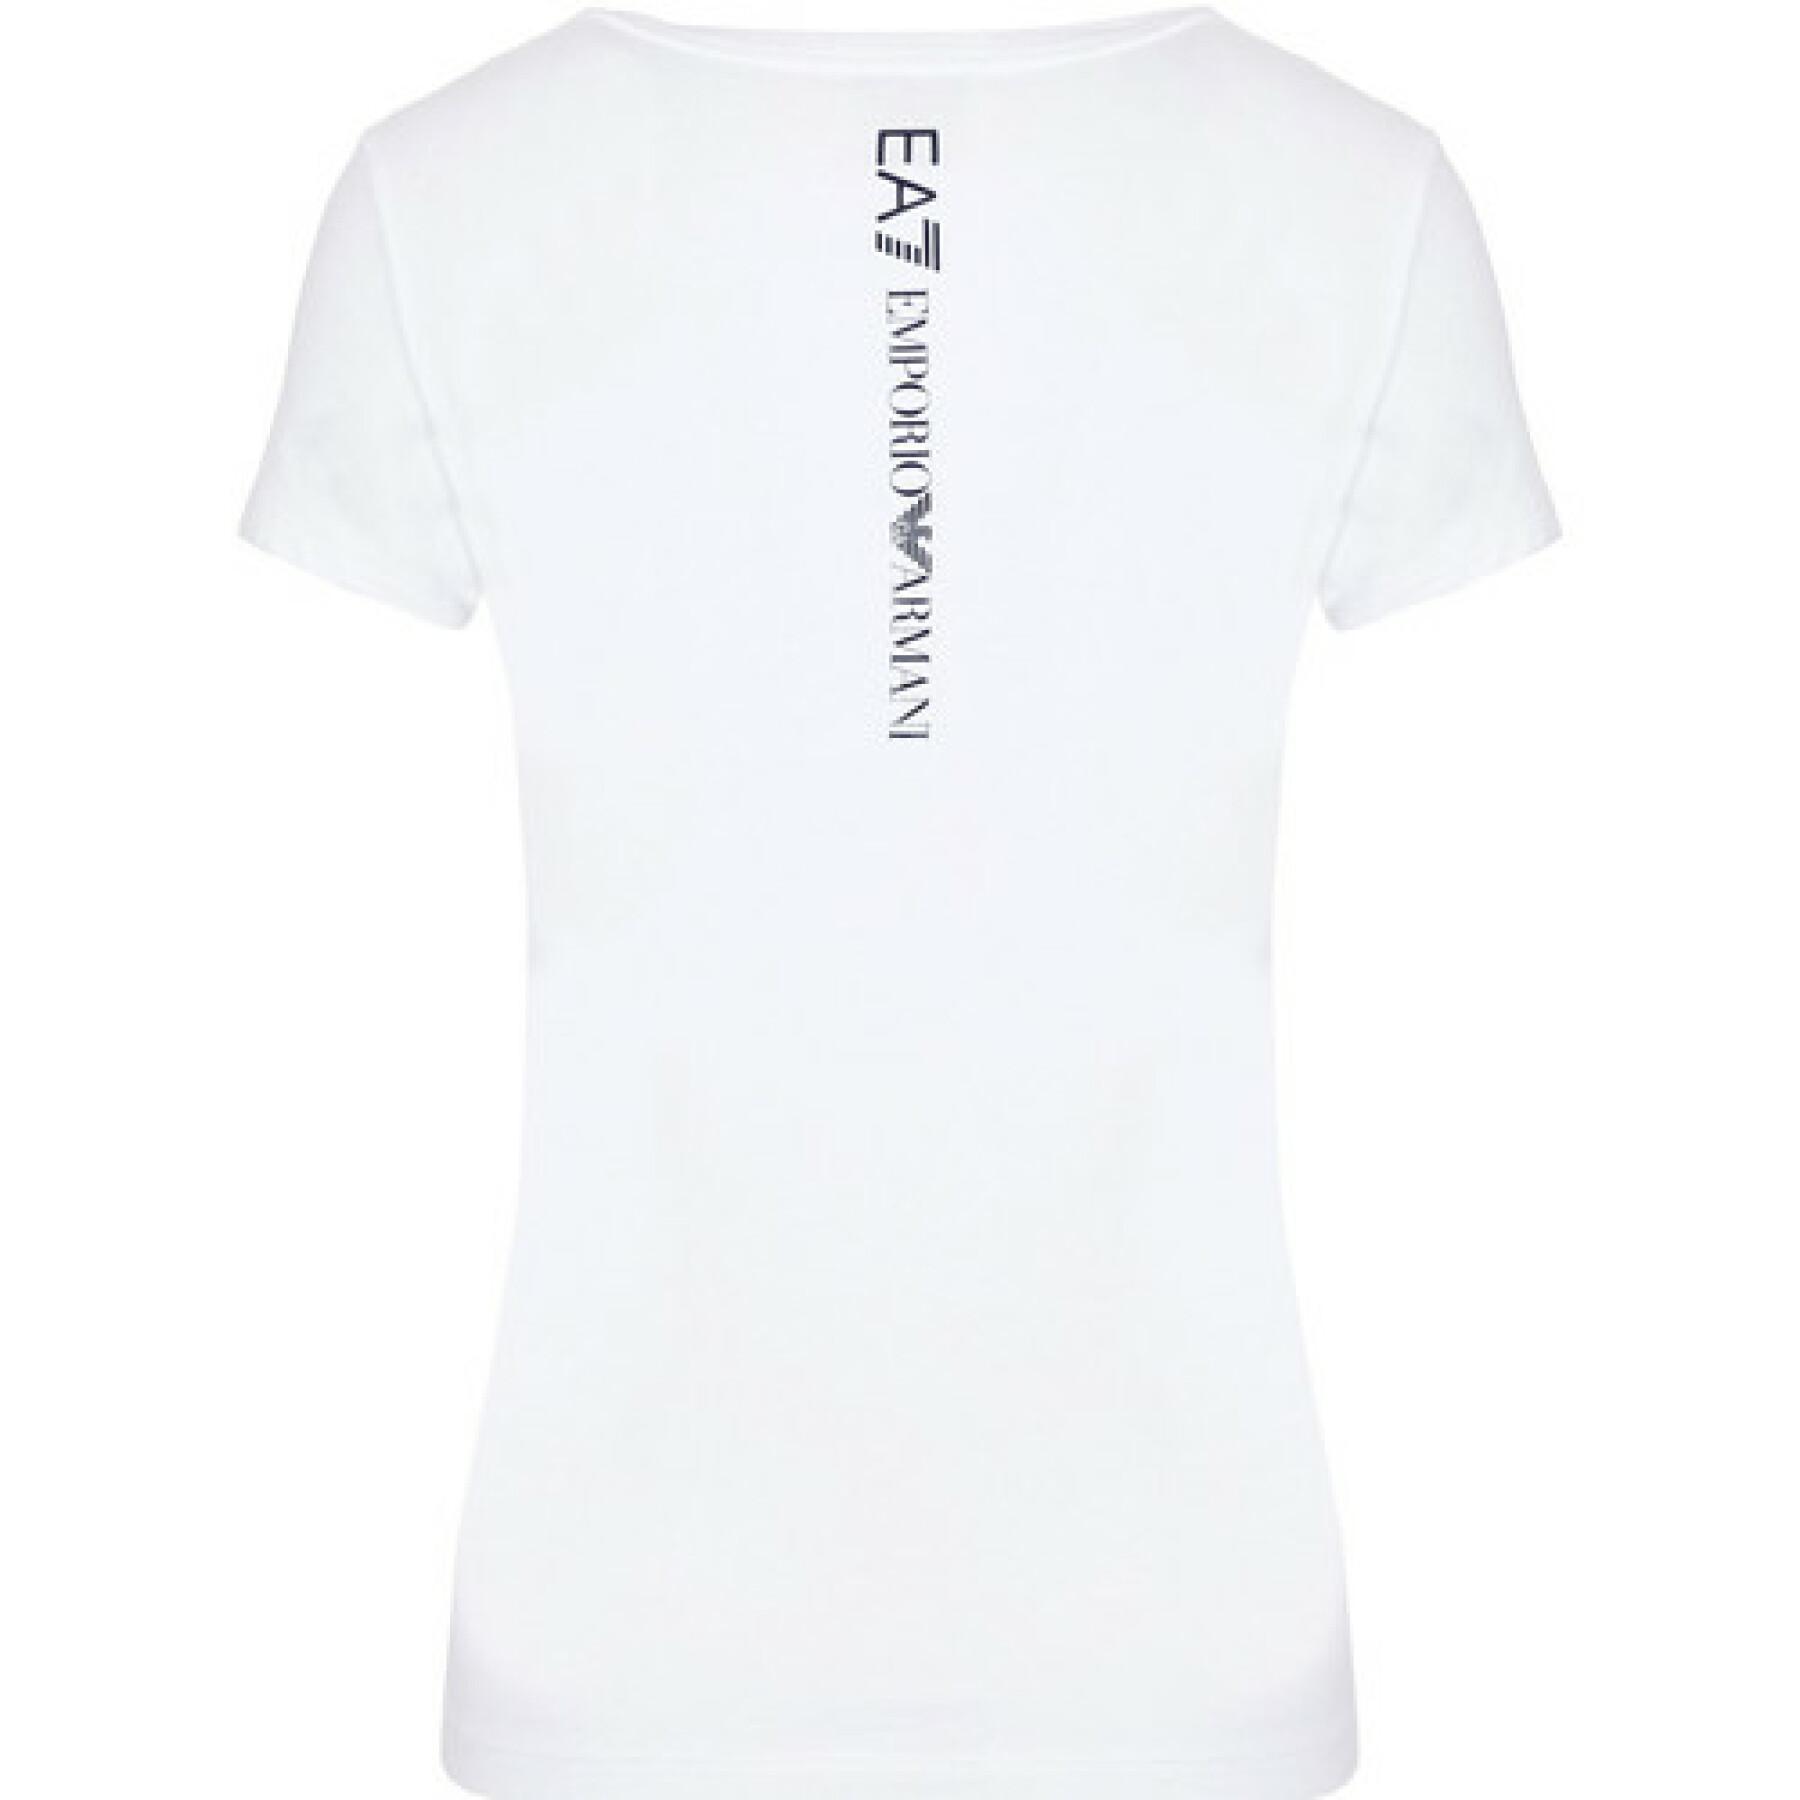 Dames-T-shirt Armani Exchange EA7